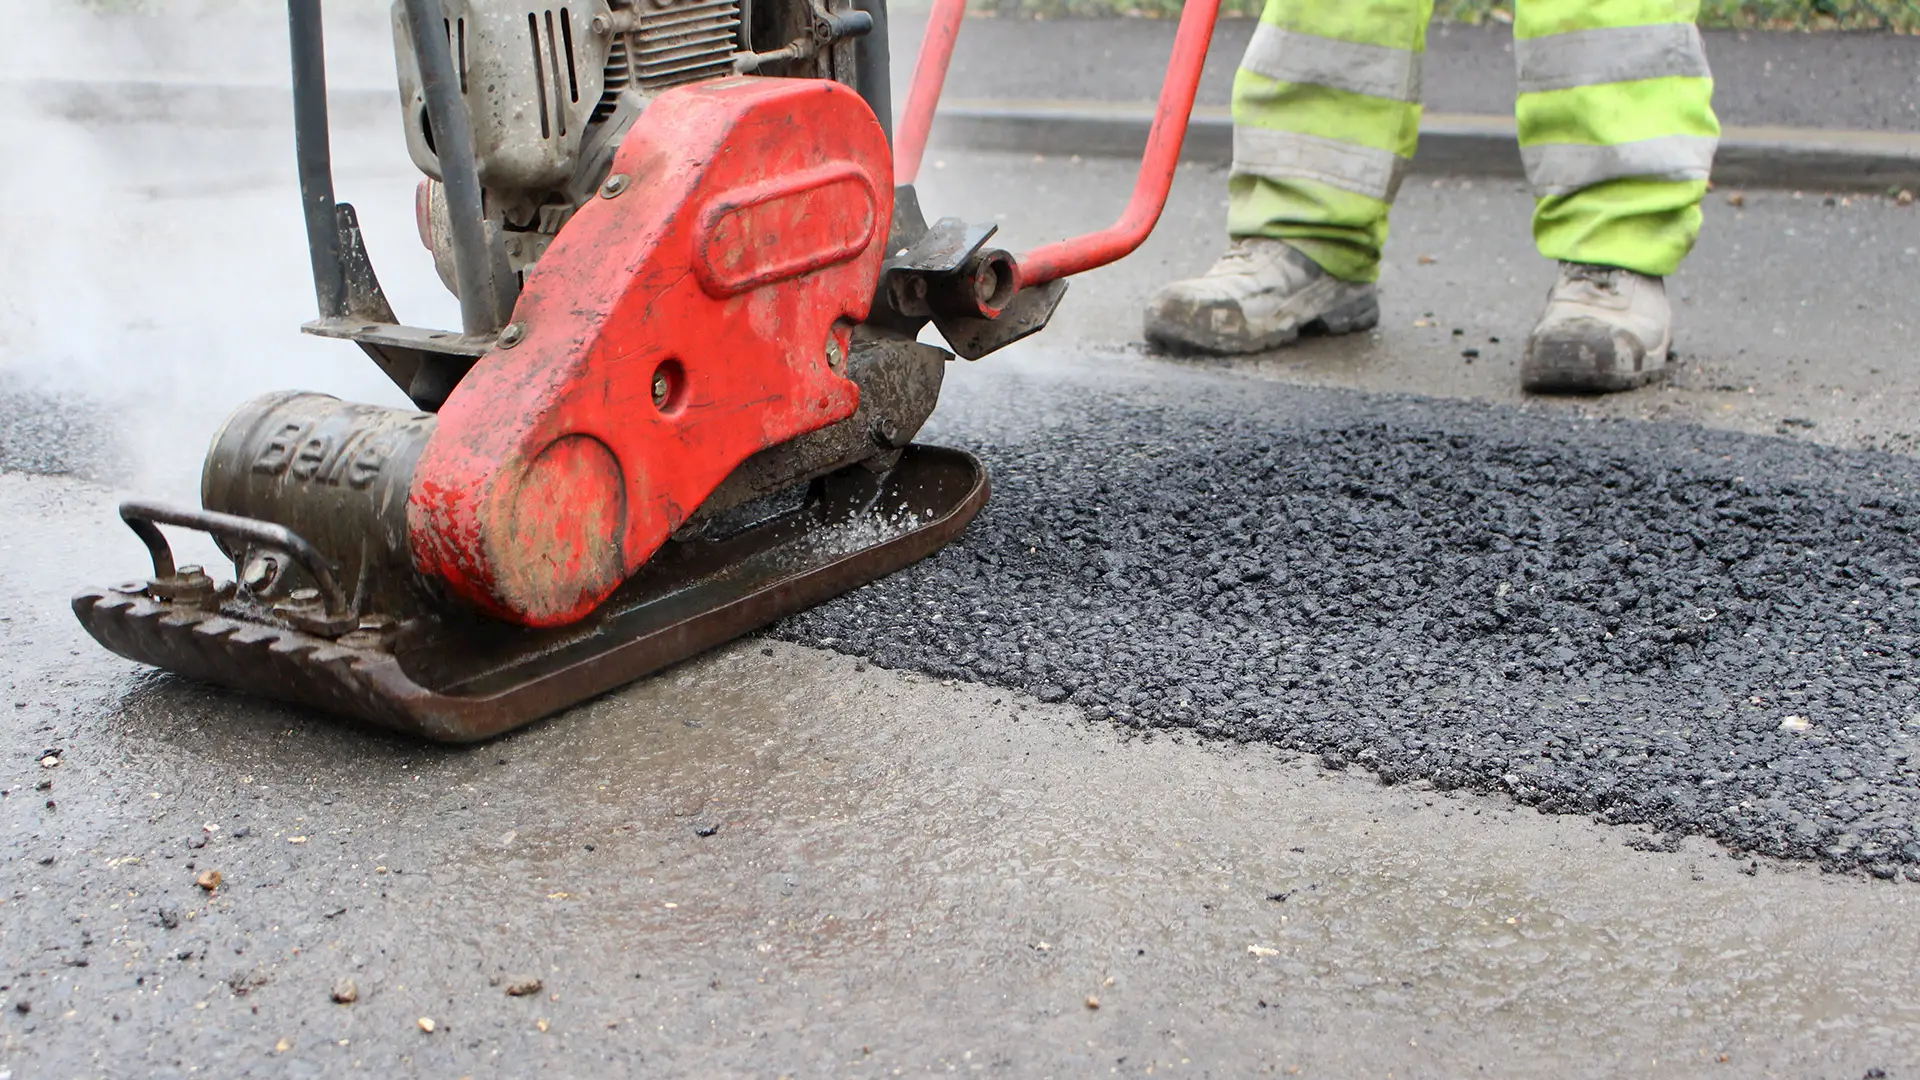 Experienced pothole repair contractors in Kidderminster